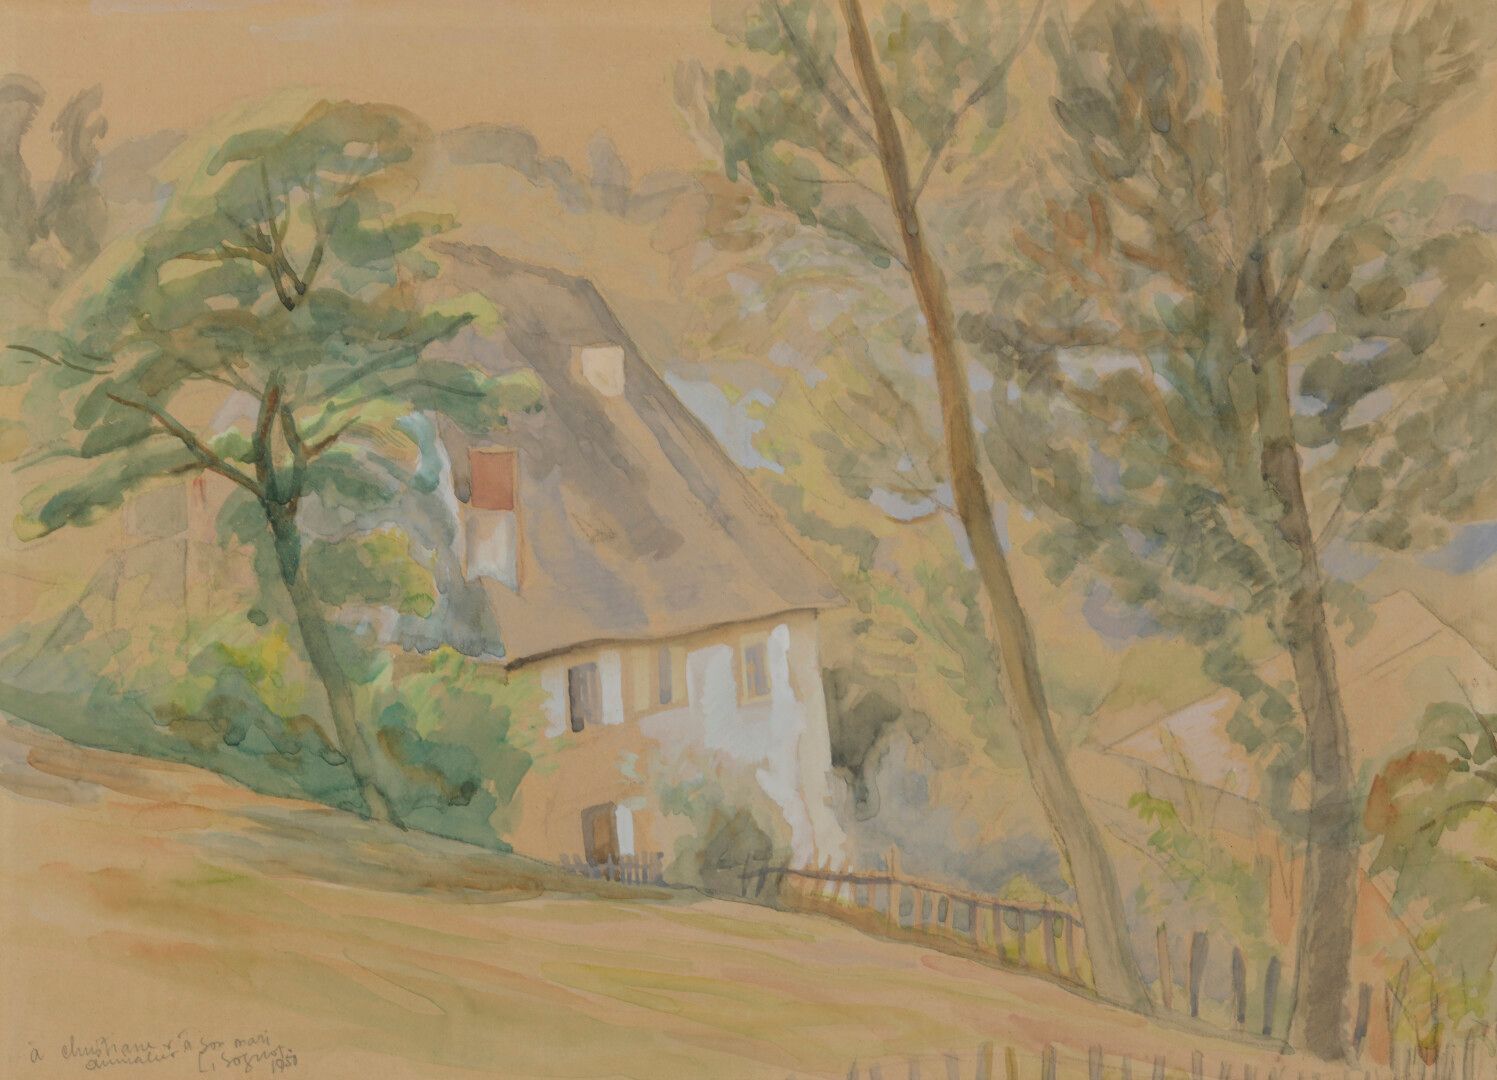 Louis SOGNOT (1892-1969) 路易斯-索格诺(1892-1969)

乡村景观

纸上水彩画和水粉画一对。

签名并注明日期为1950年，寄&hellip;